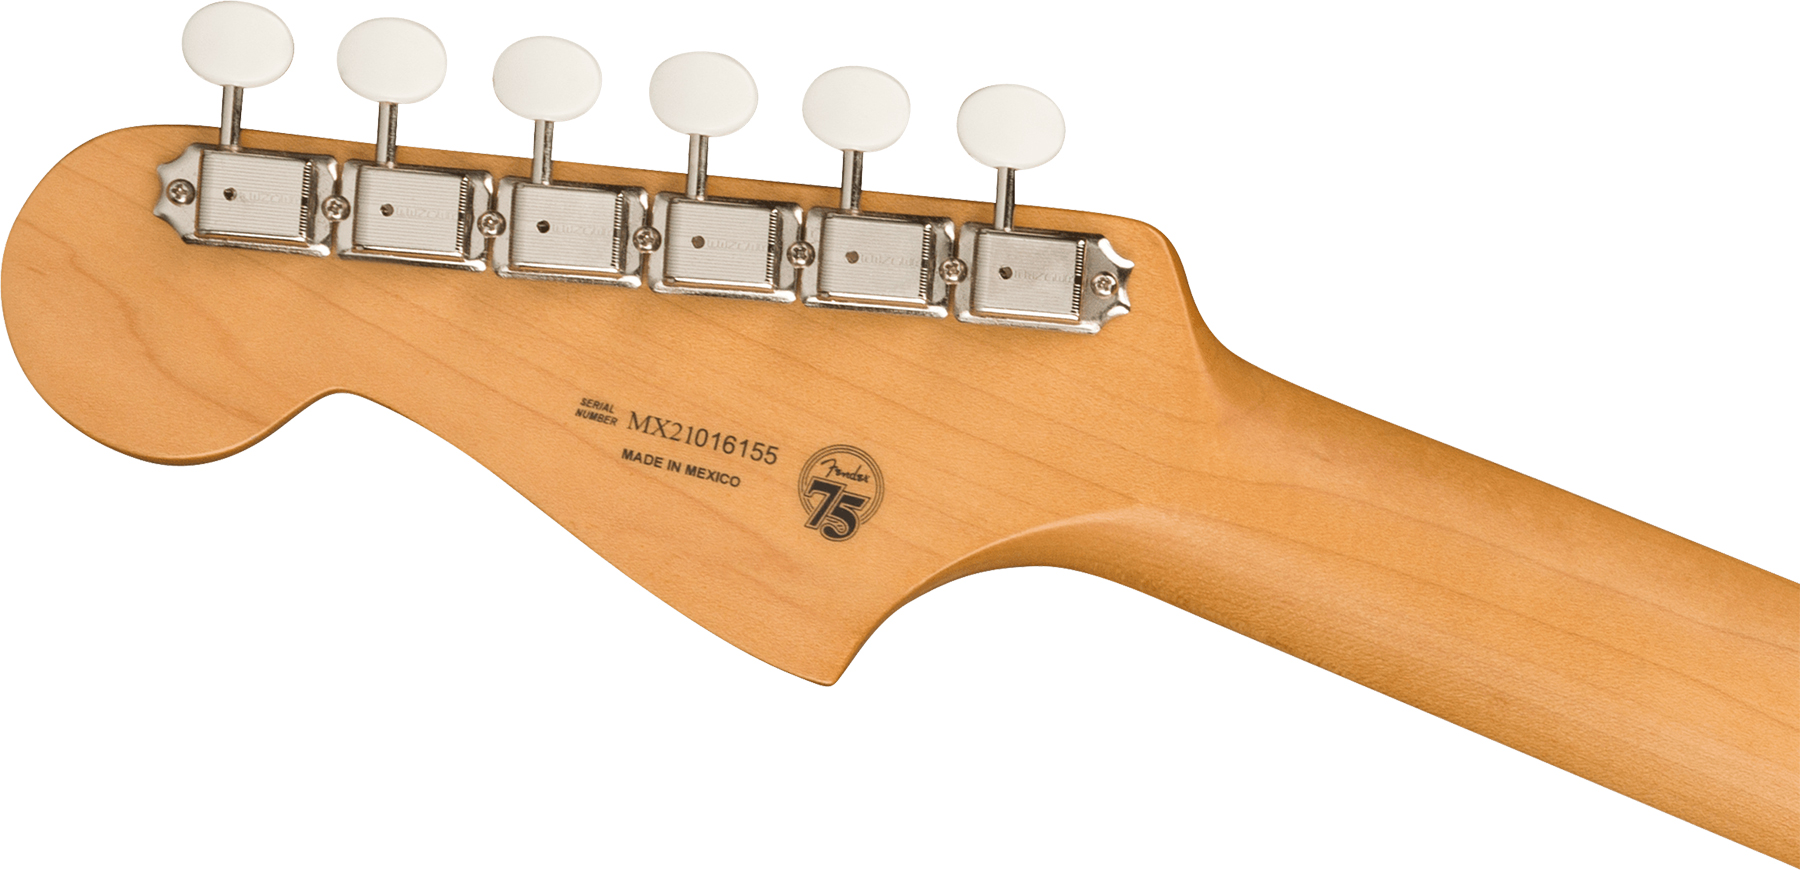 Fender Jazzmaster Gold Foil Ltd Mex 3mh Trem Bigsby Eb - Shoreline Gold - Guitarra electrica retro rock - Variation 3